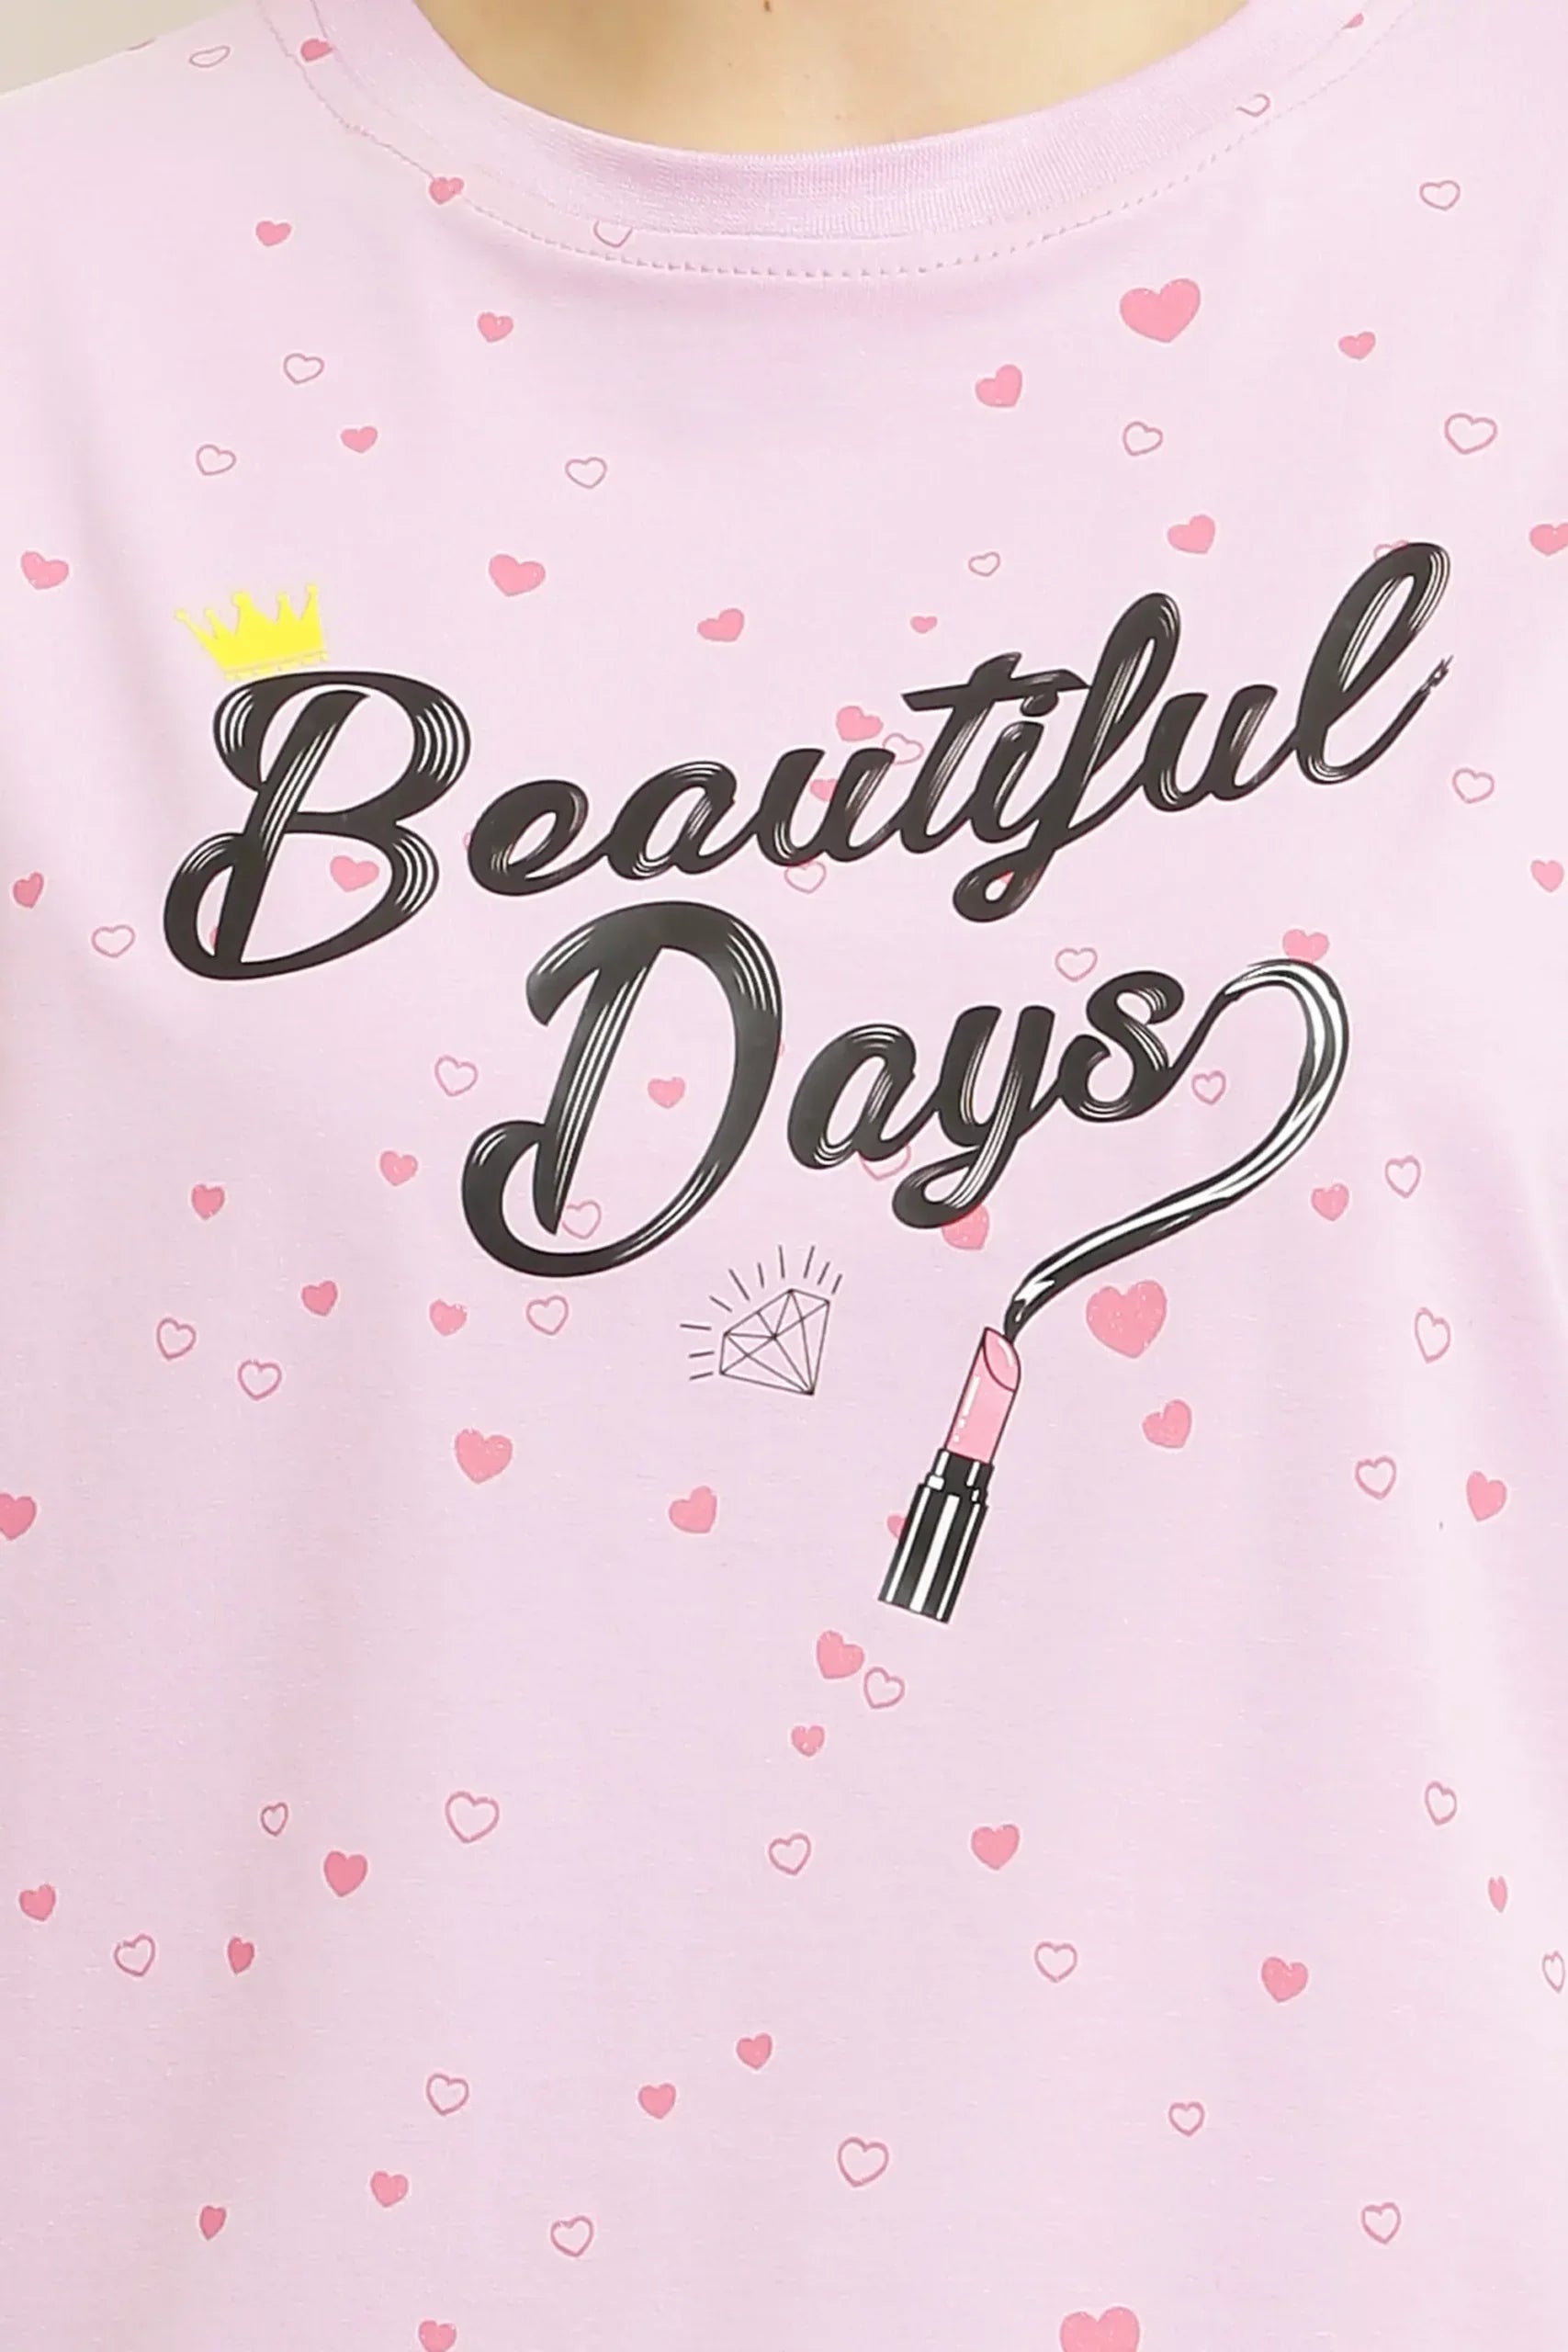 Beautiful Days (Light Pink) Crop Tshirt - Your Passport to Effortless Chic!